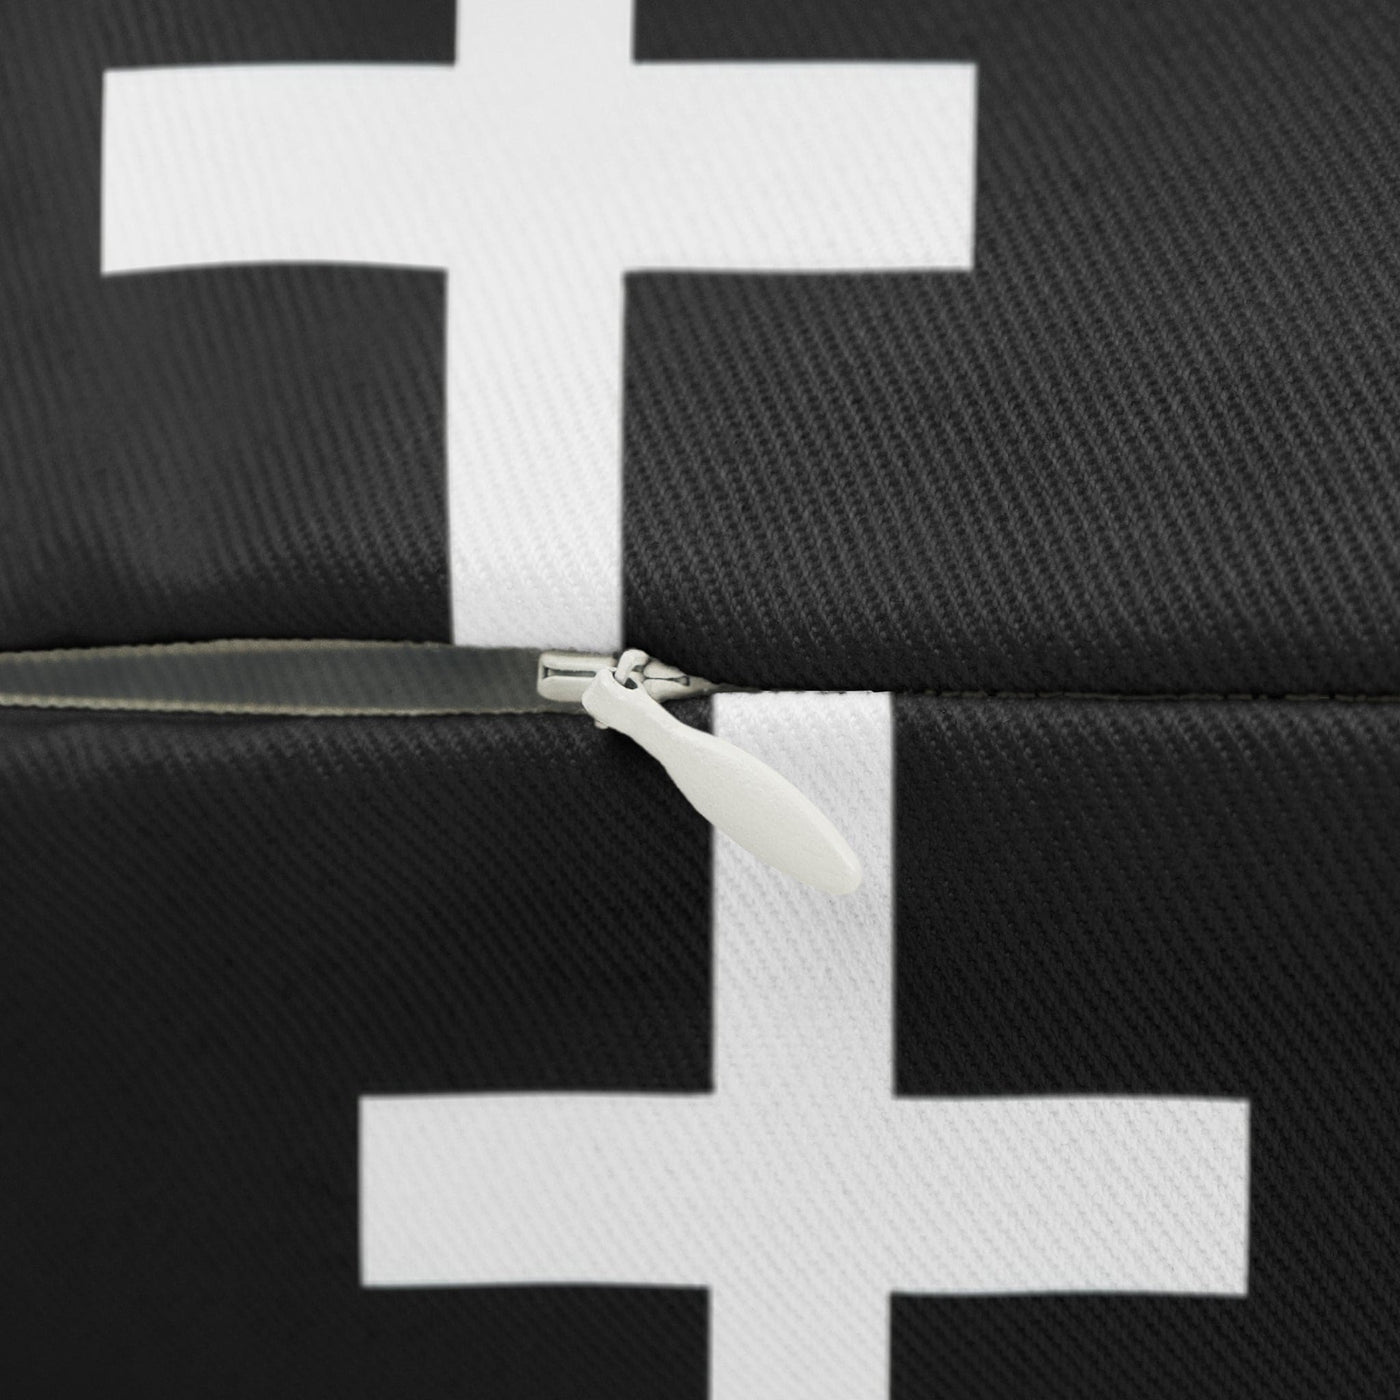 Decorative Lumbar Throw Pillow - Black And White Seamless Cross Pattern